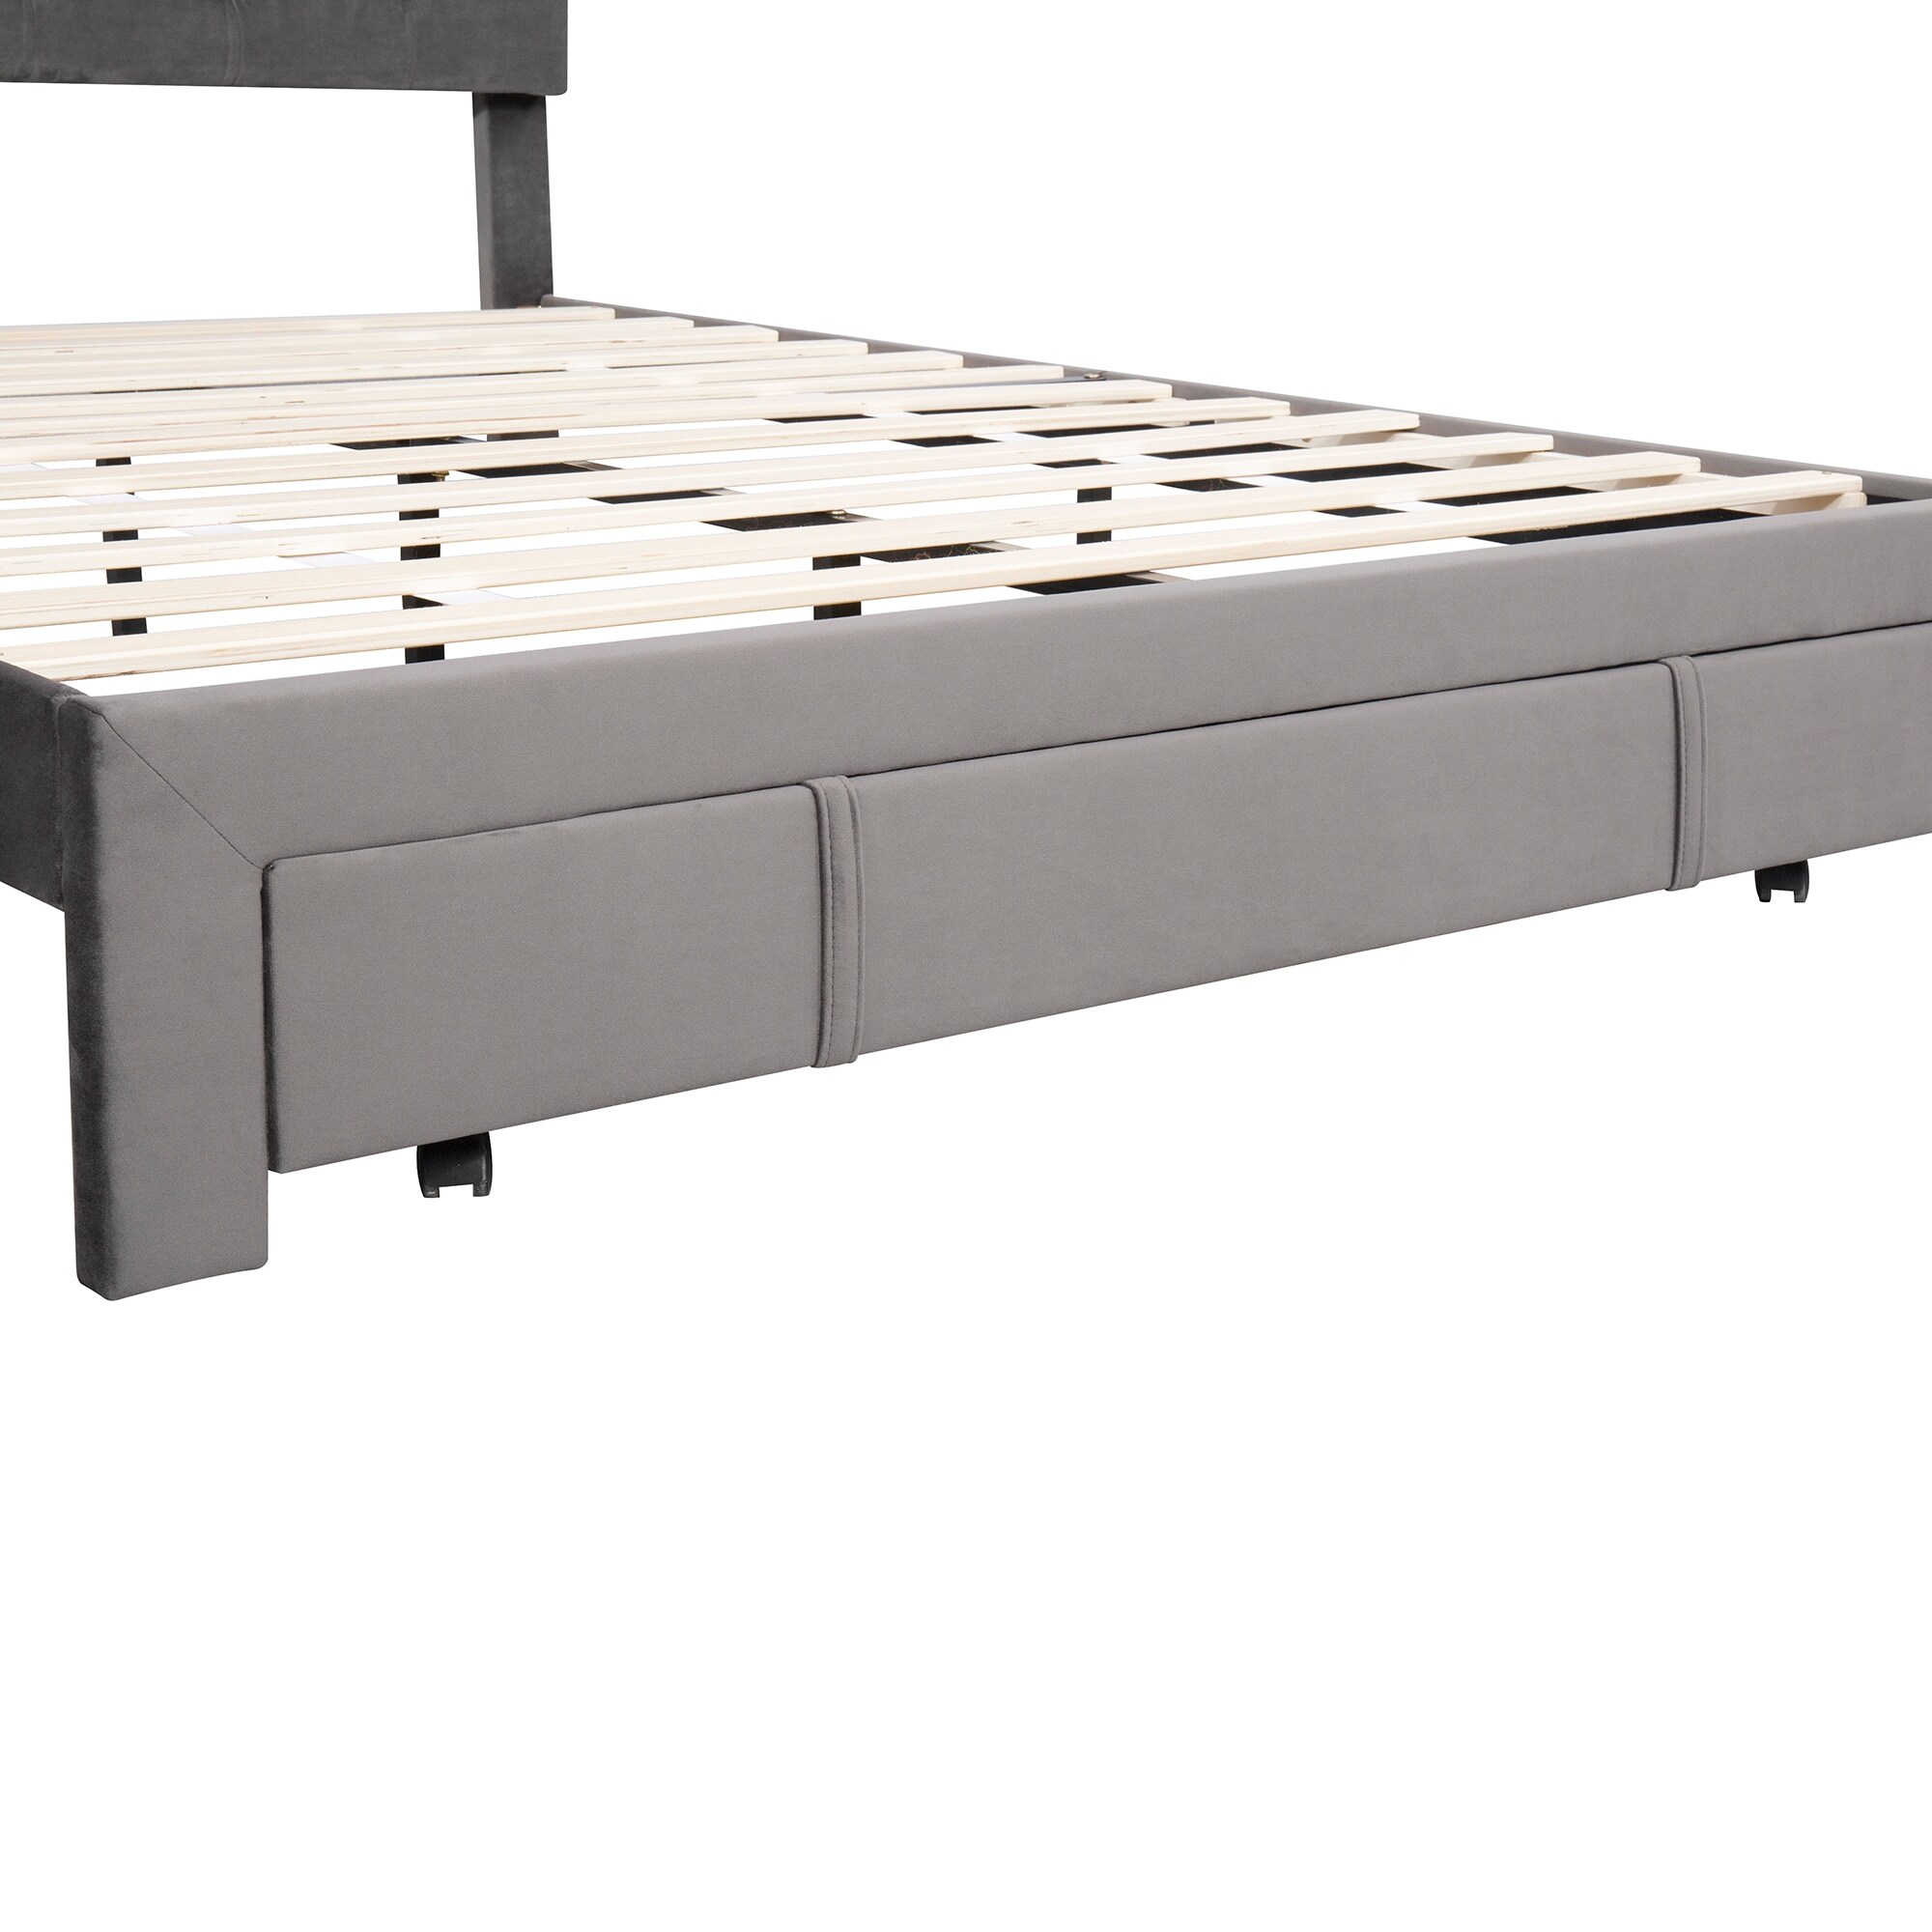 Queen Size Velvet Upholstered Storage Bed,Platform Bed with Drawer and Wooden Slat